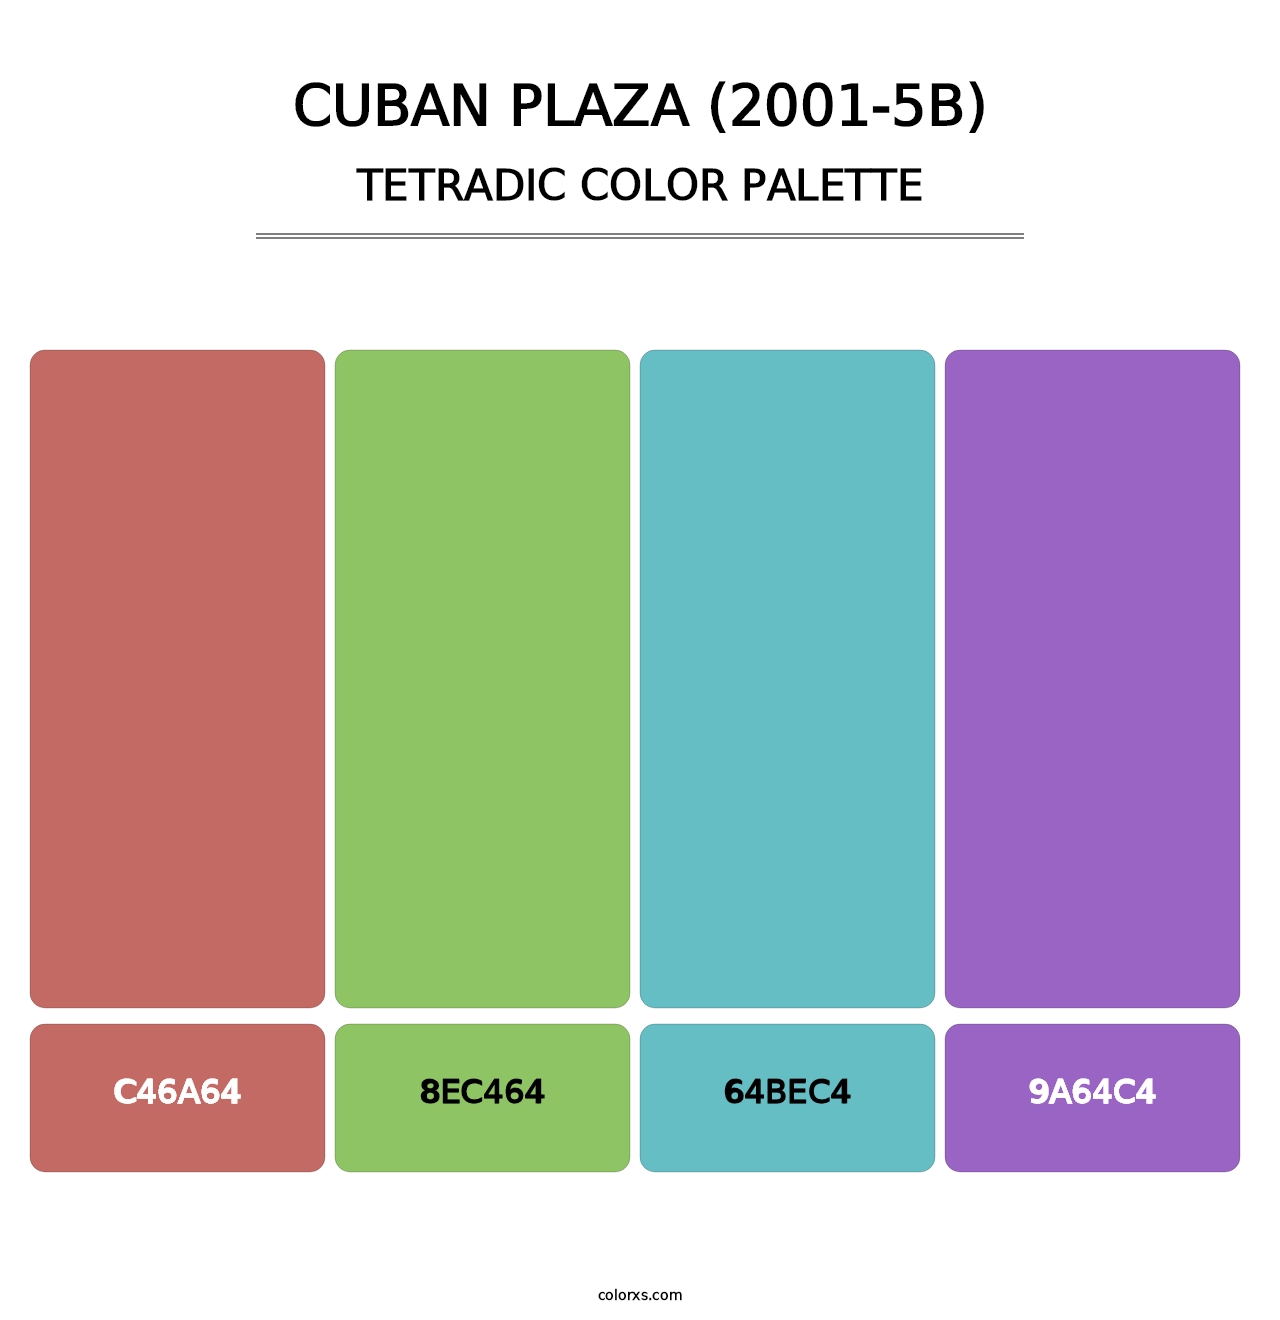 Cuban Plaza (2001-5B) - Tetradic Color Palette